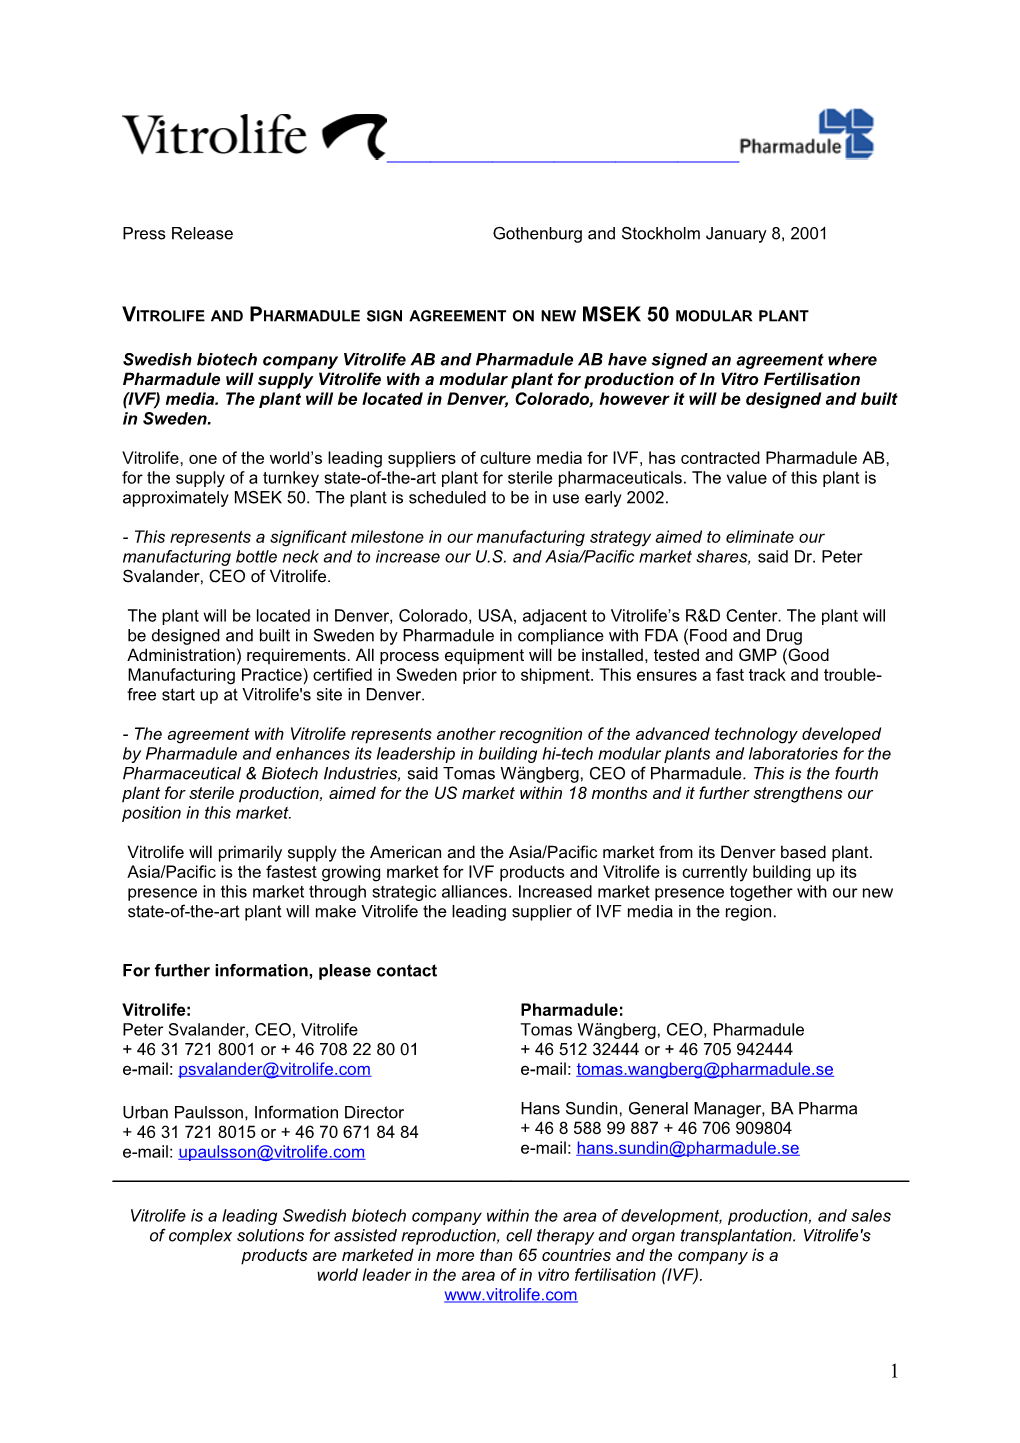 Vitrolife and Pharmadule Sign Agreement on New MSEK 50 Modular Plant